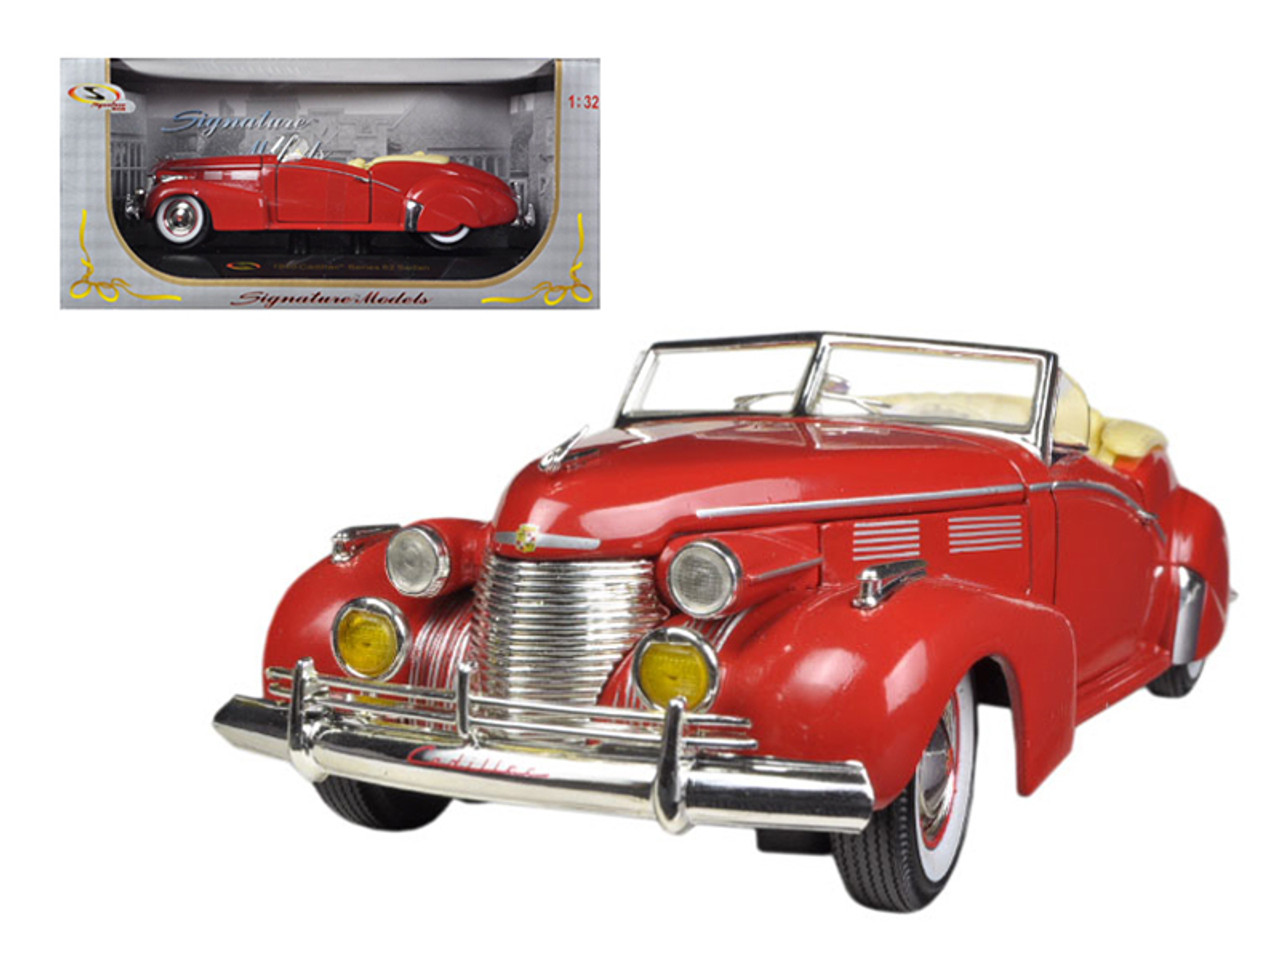 1940 Cadillac Sedan Series 62 Red 1/32 Diecast Car Model by Signature Models